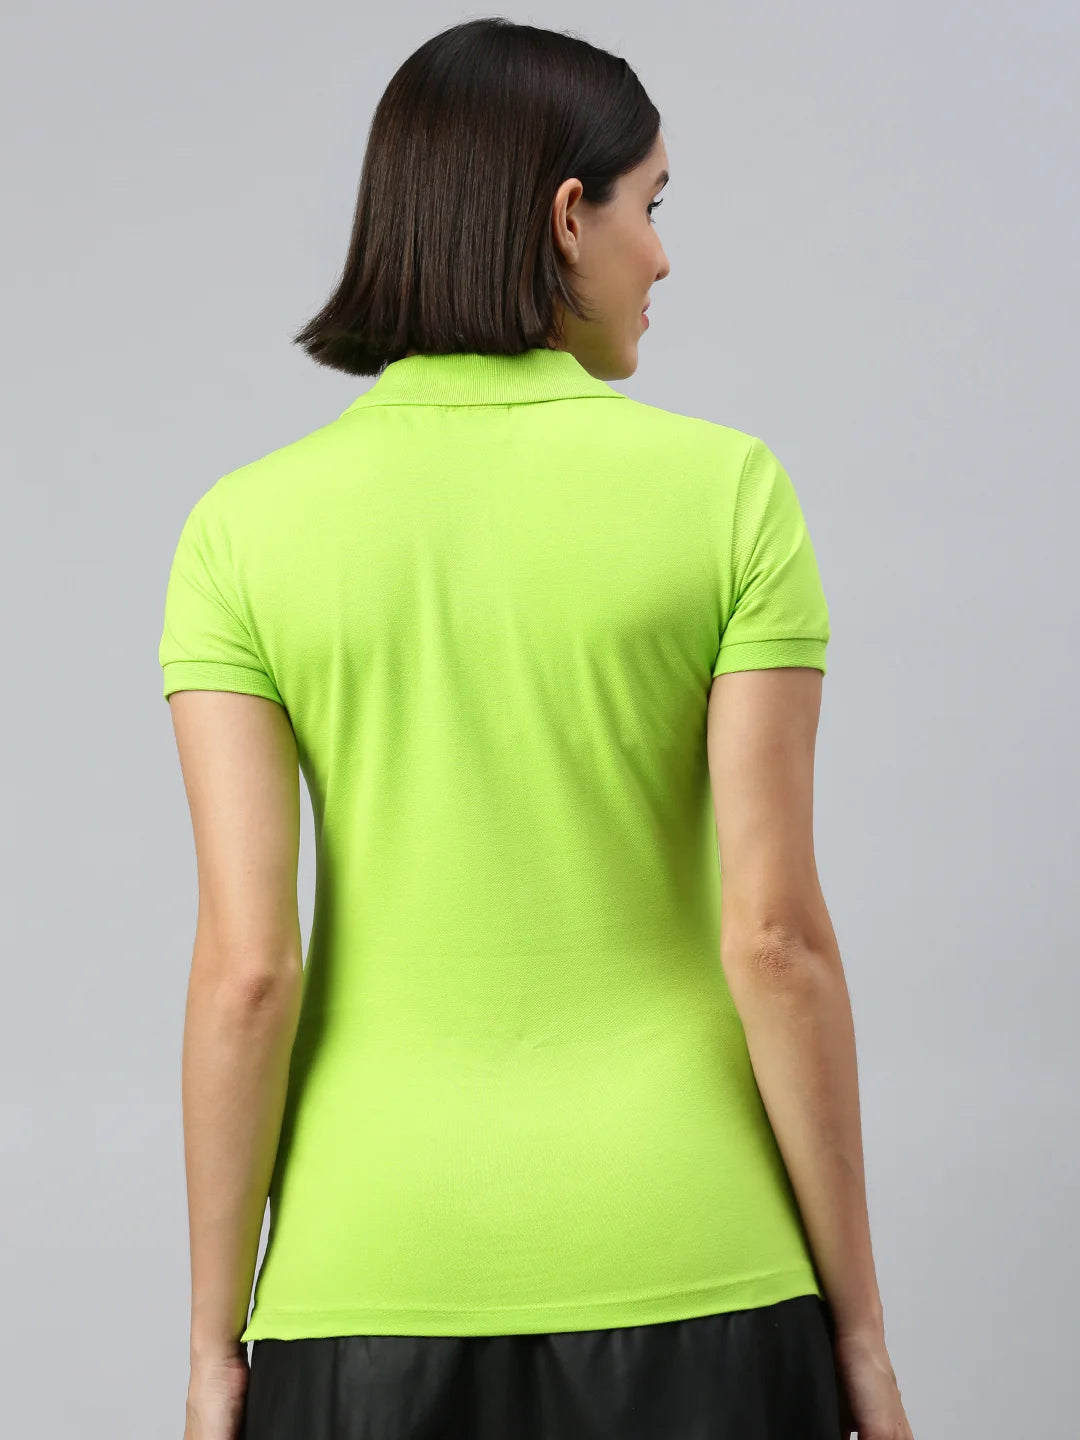 frauen-stacy-bio-fairtrade-polo-shirt-brilliant-hues-limette-back